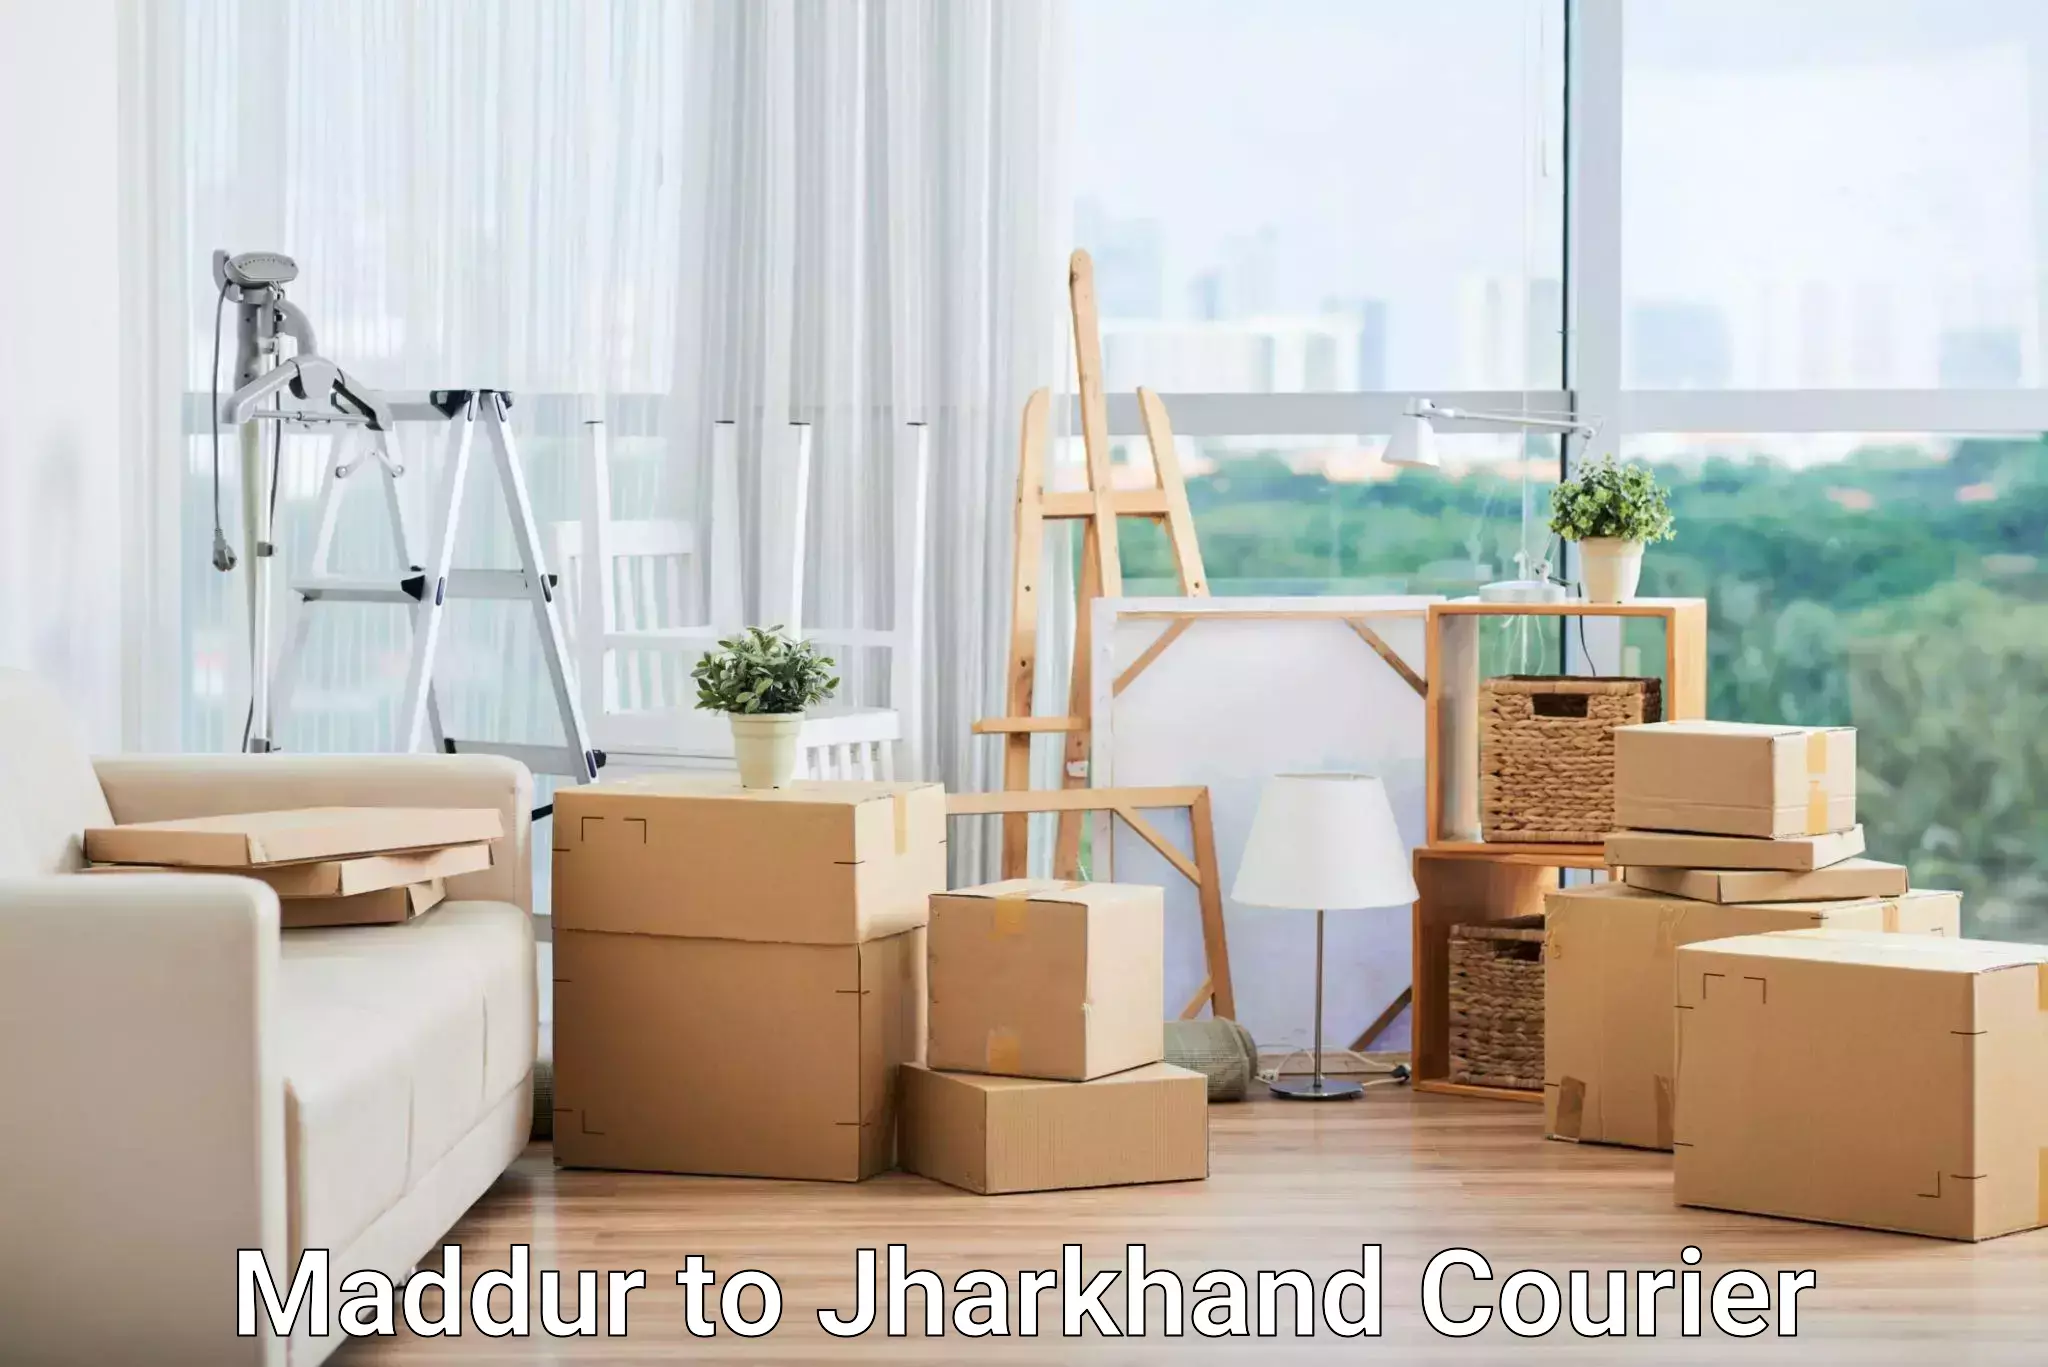 Urban courier service Maddur to Jamshedpur